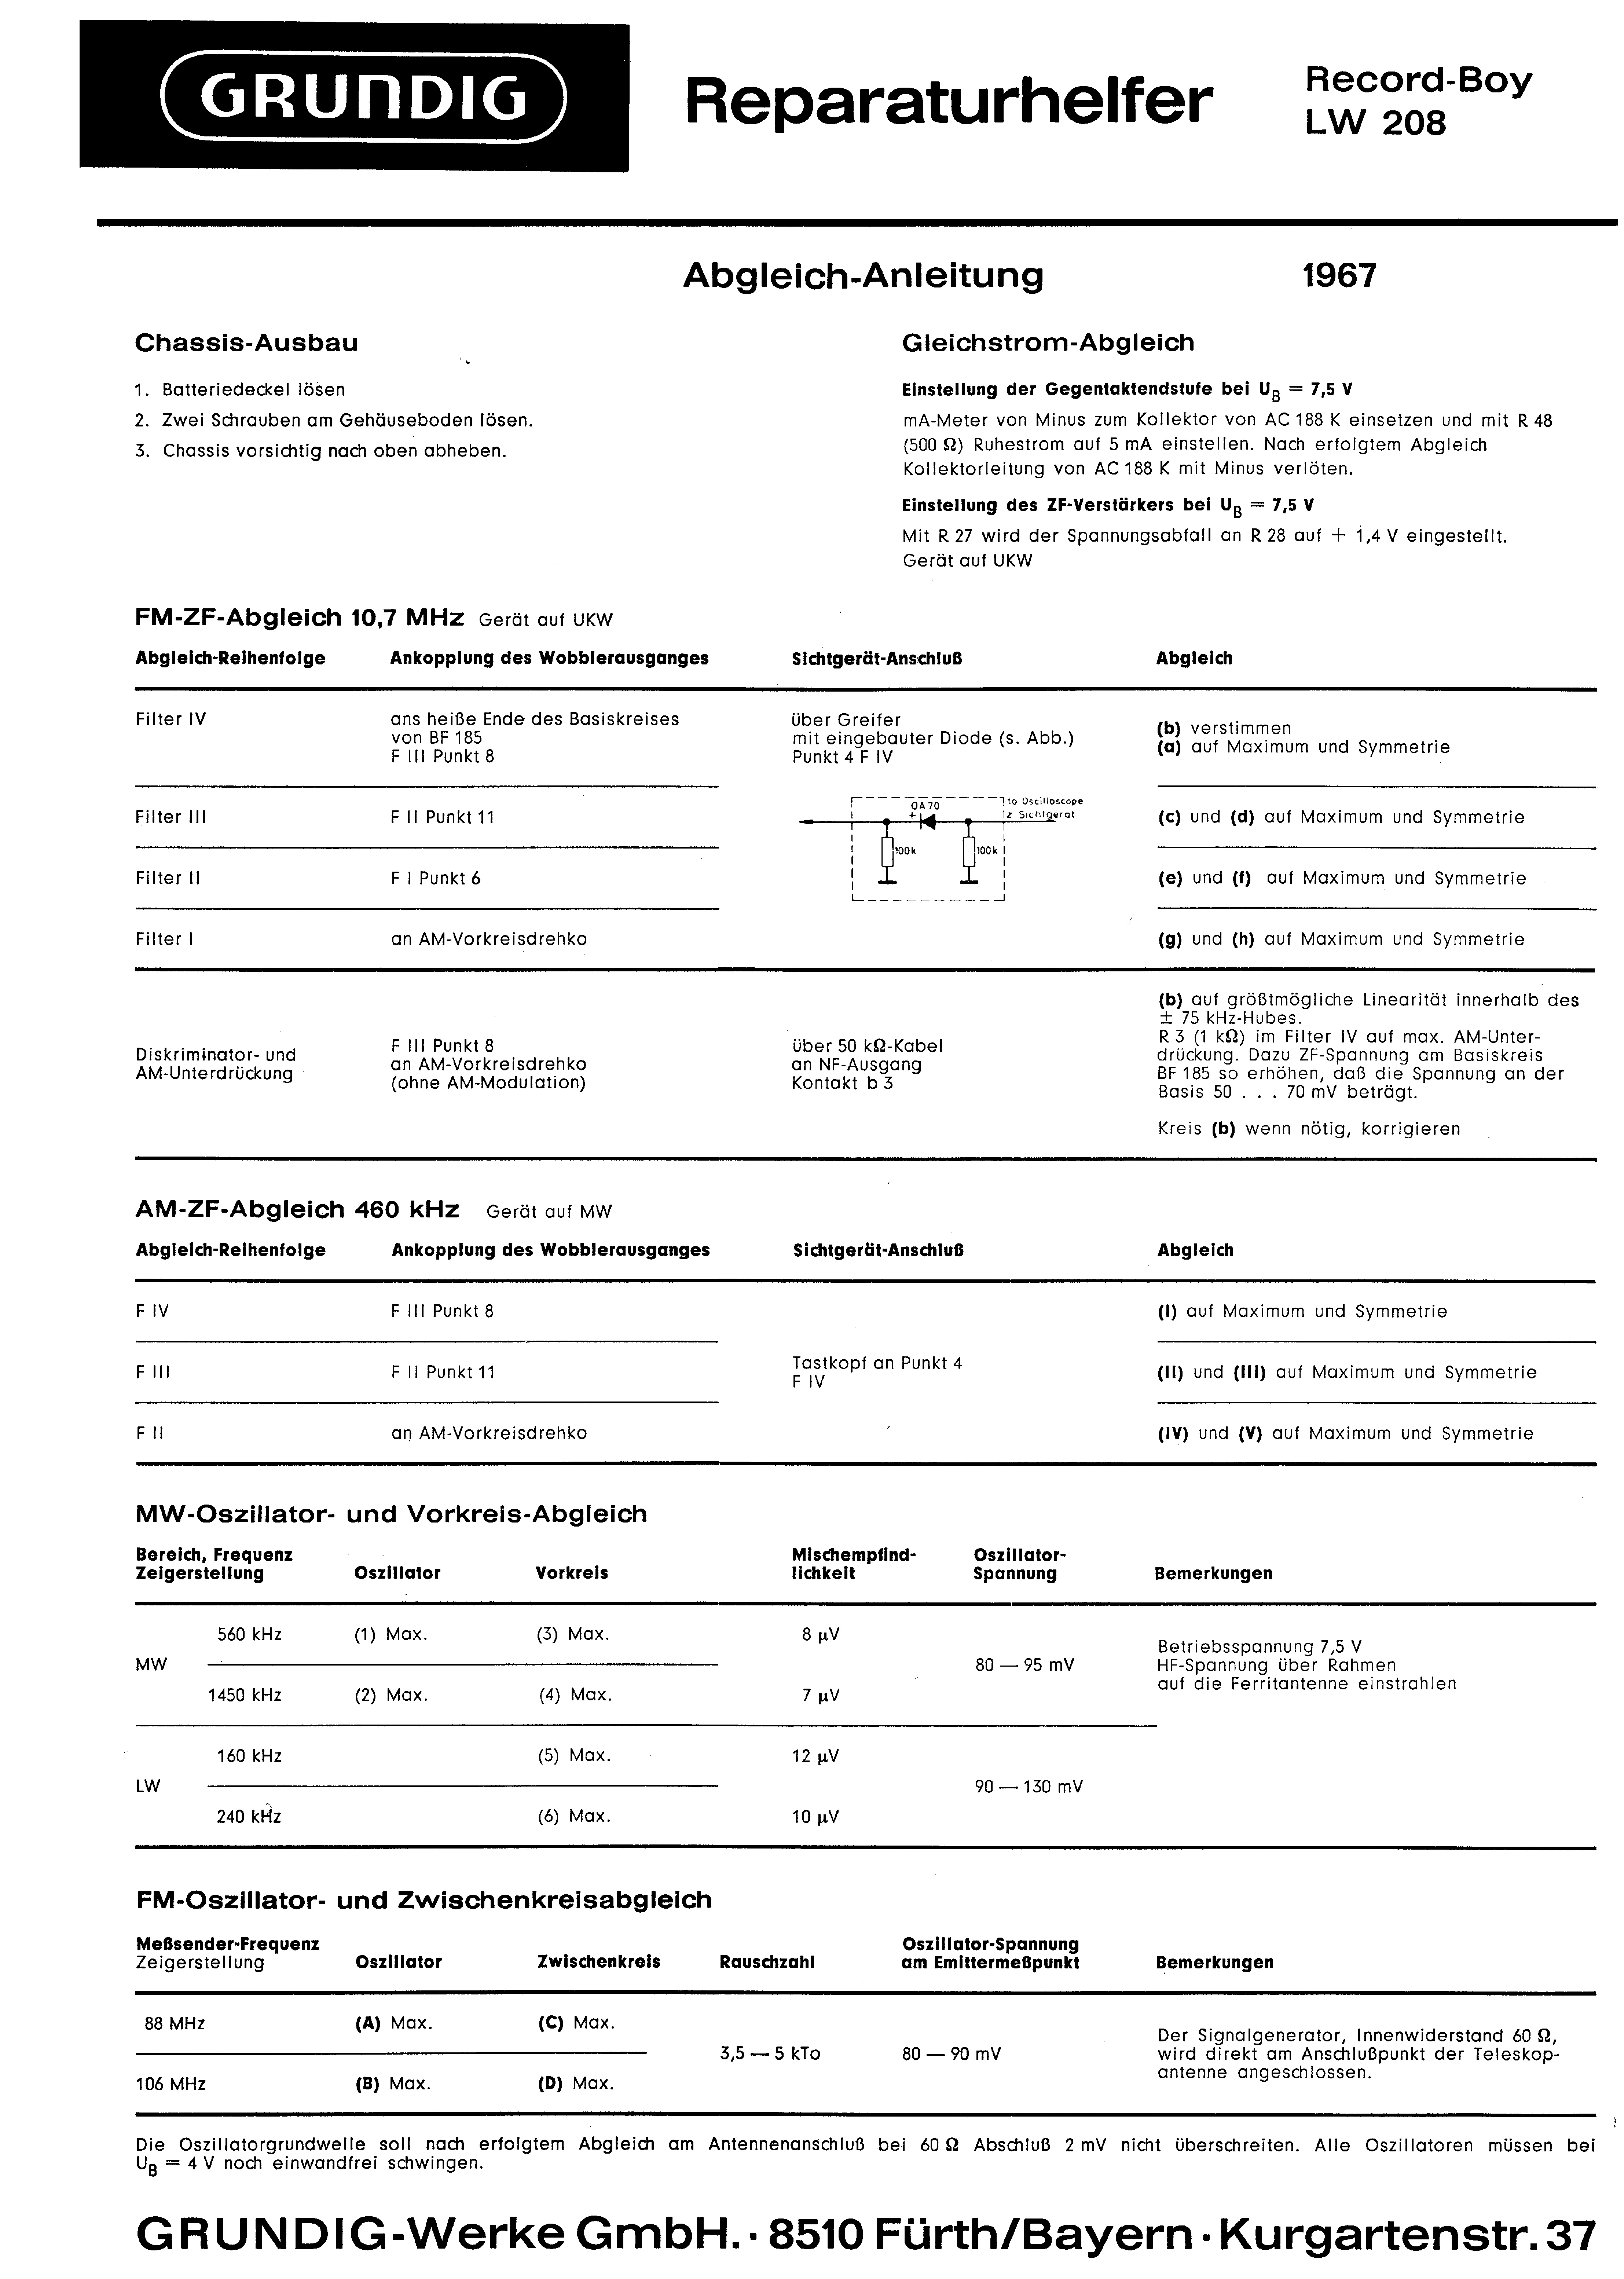 GRUNDIG RECORD-BOY LW 208 SM service manual (1st page)